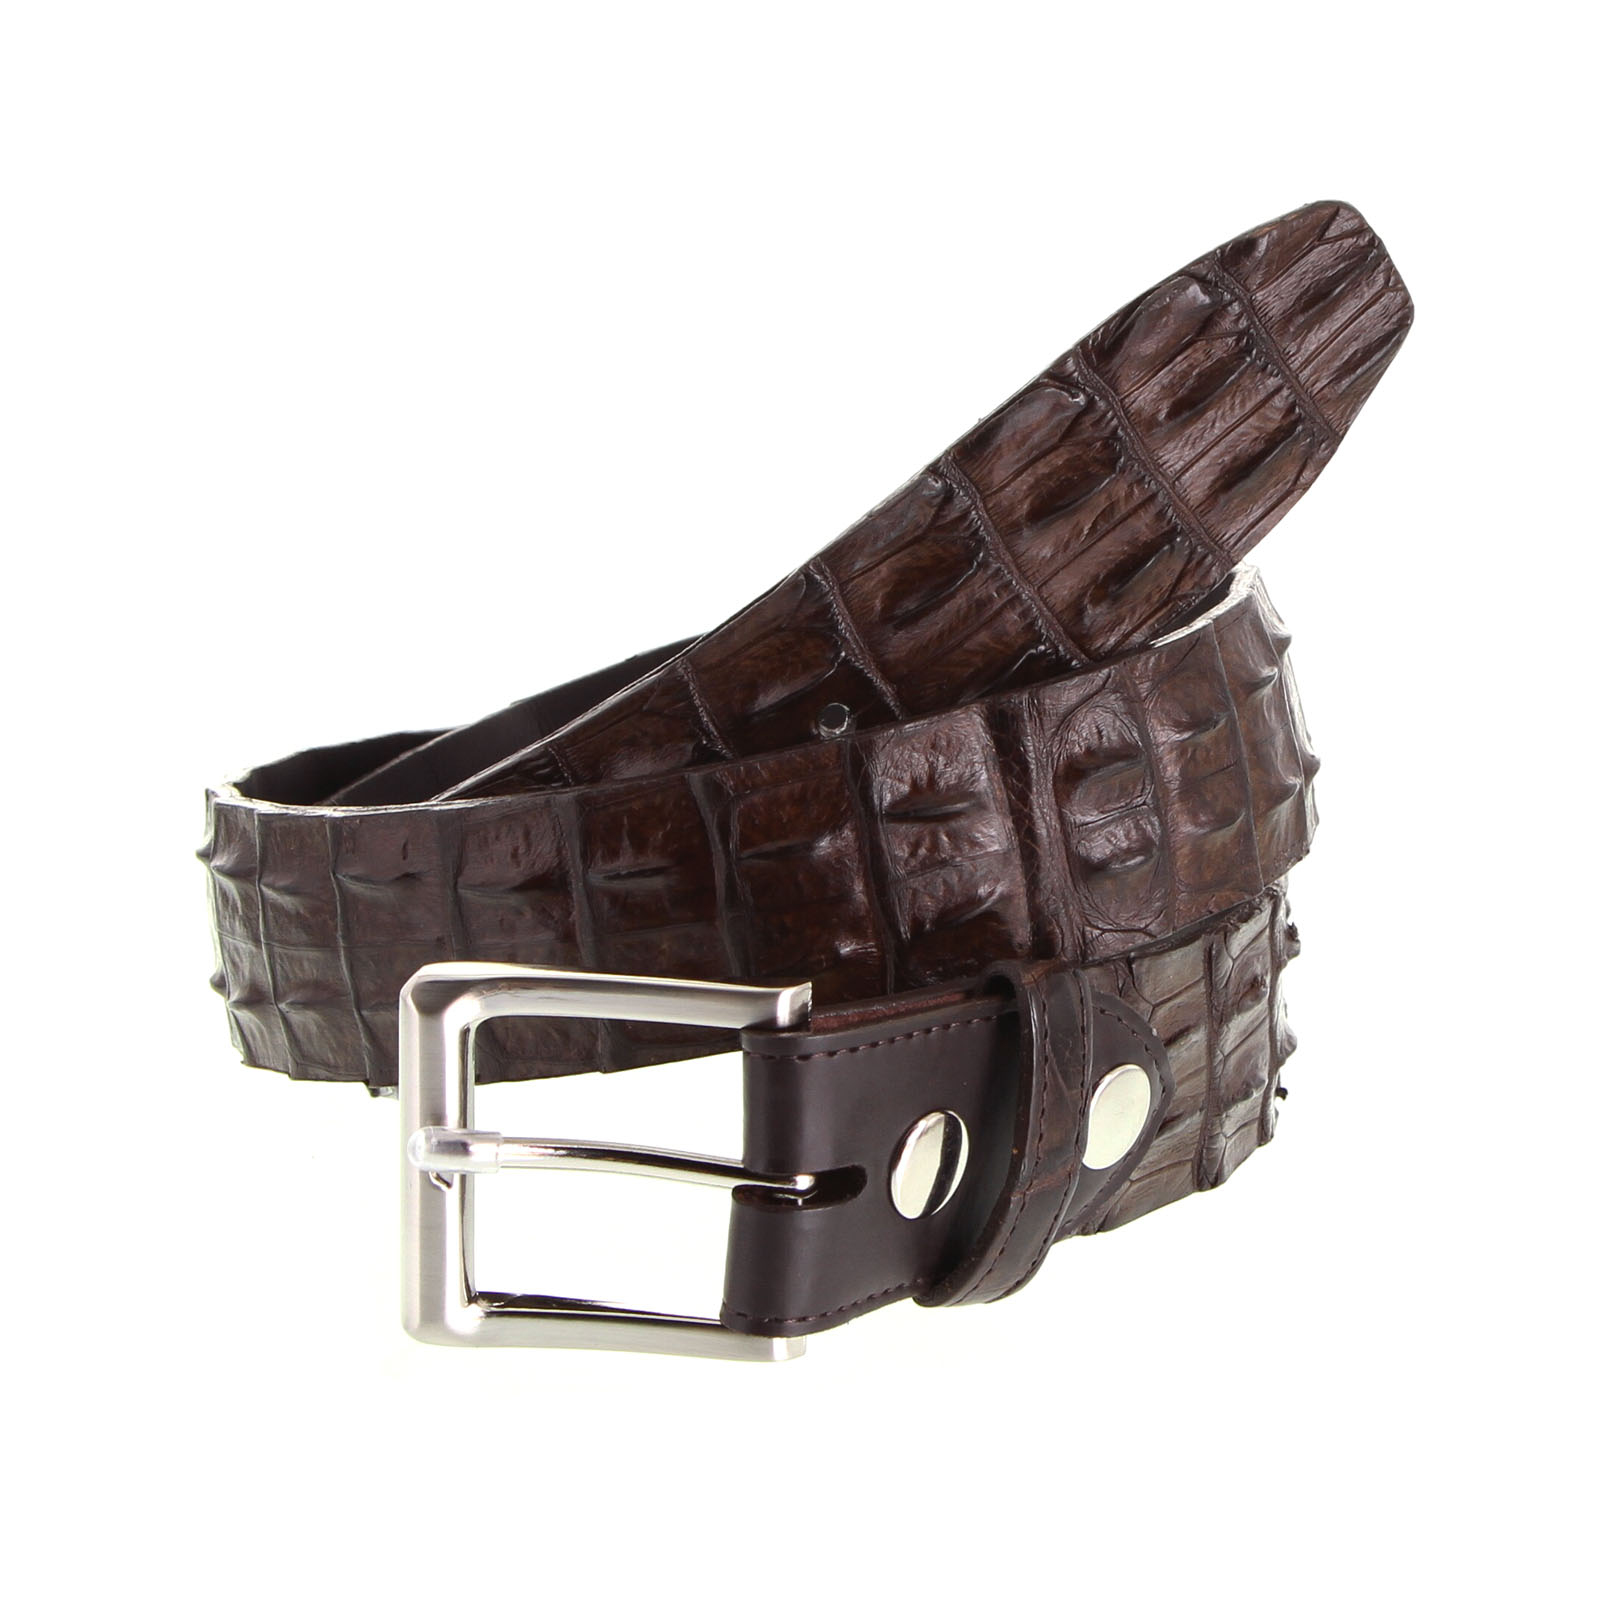 Crocodile Leather Belt - The Australian Made Campaign